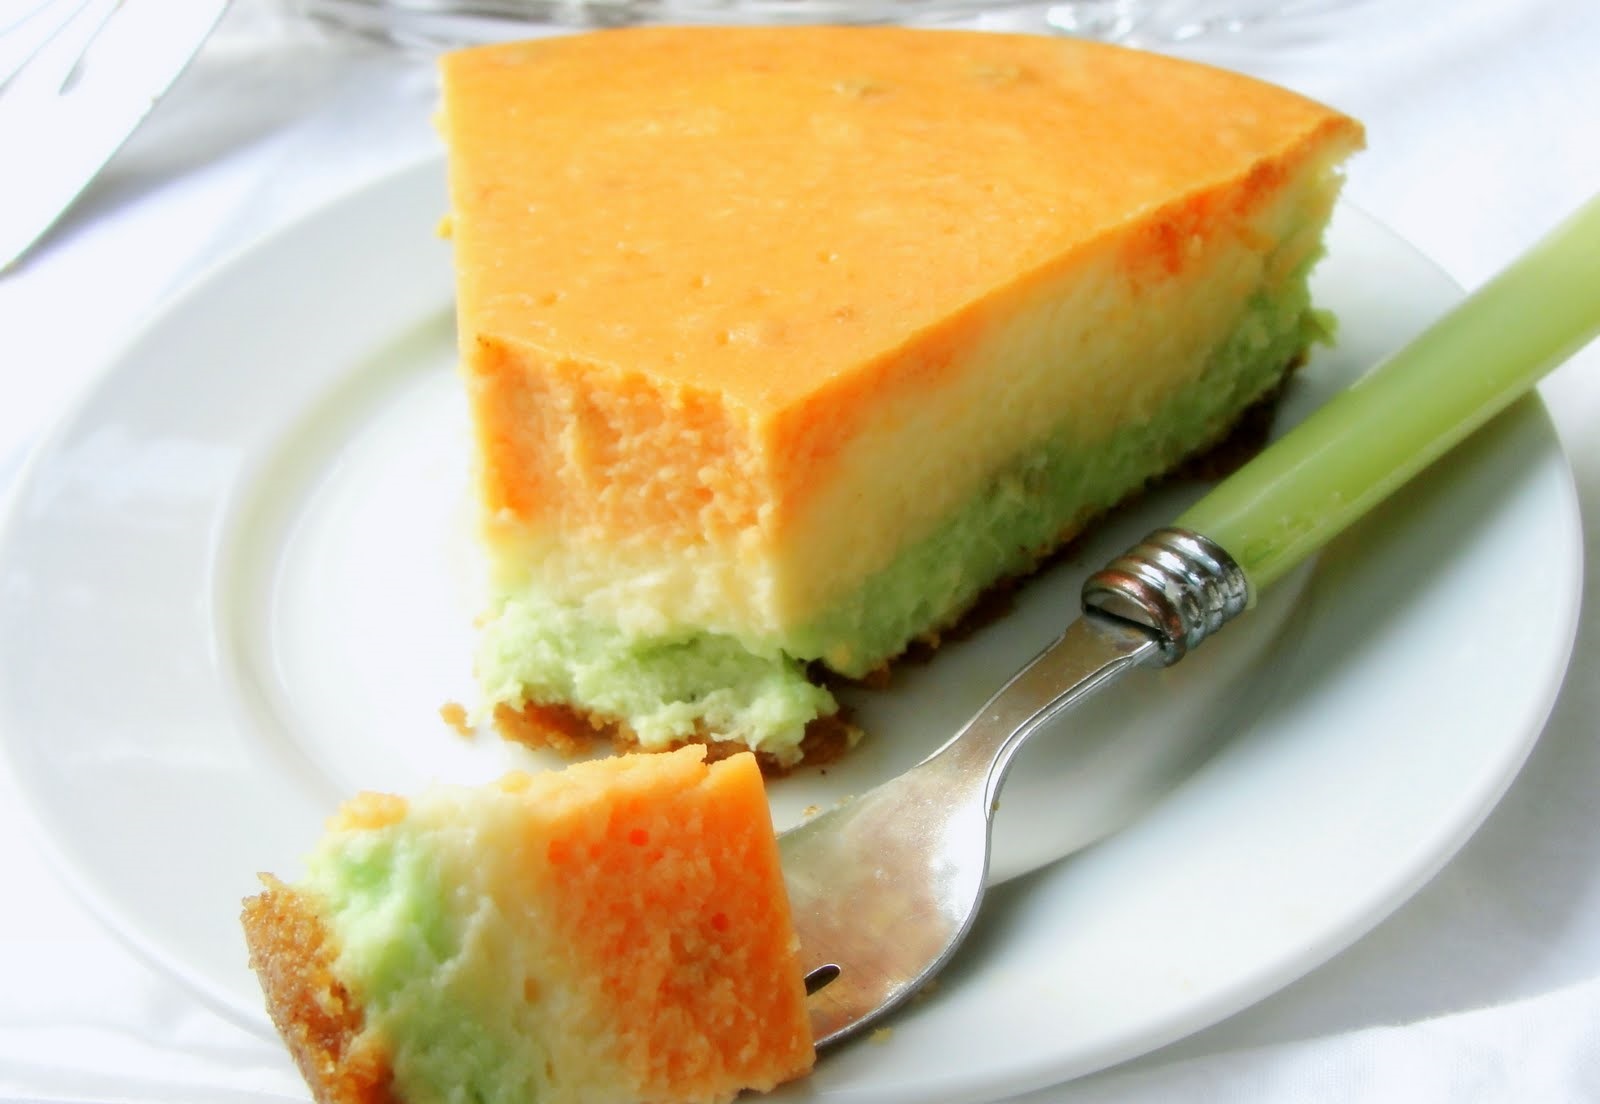 Tricolor-cheesecake